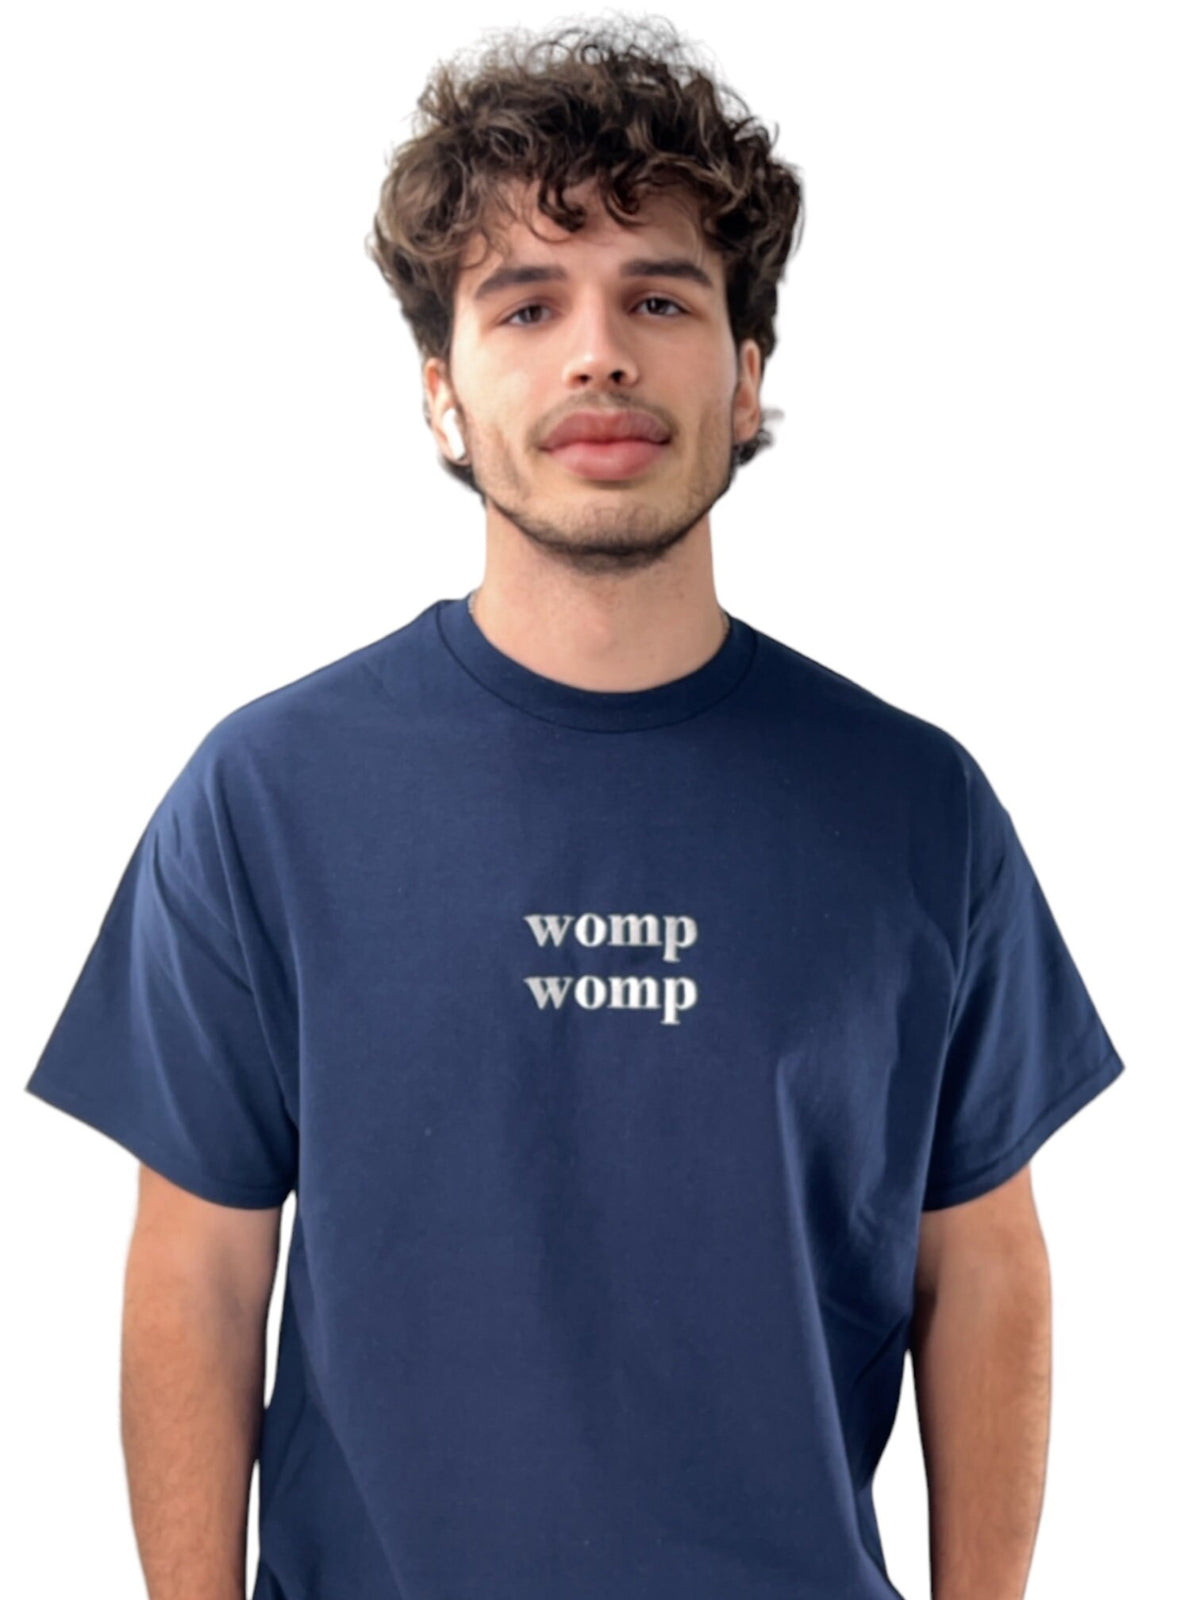 a man wearing a blue t - shirt that says women womp